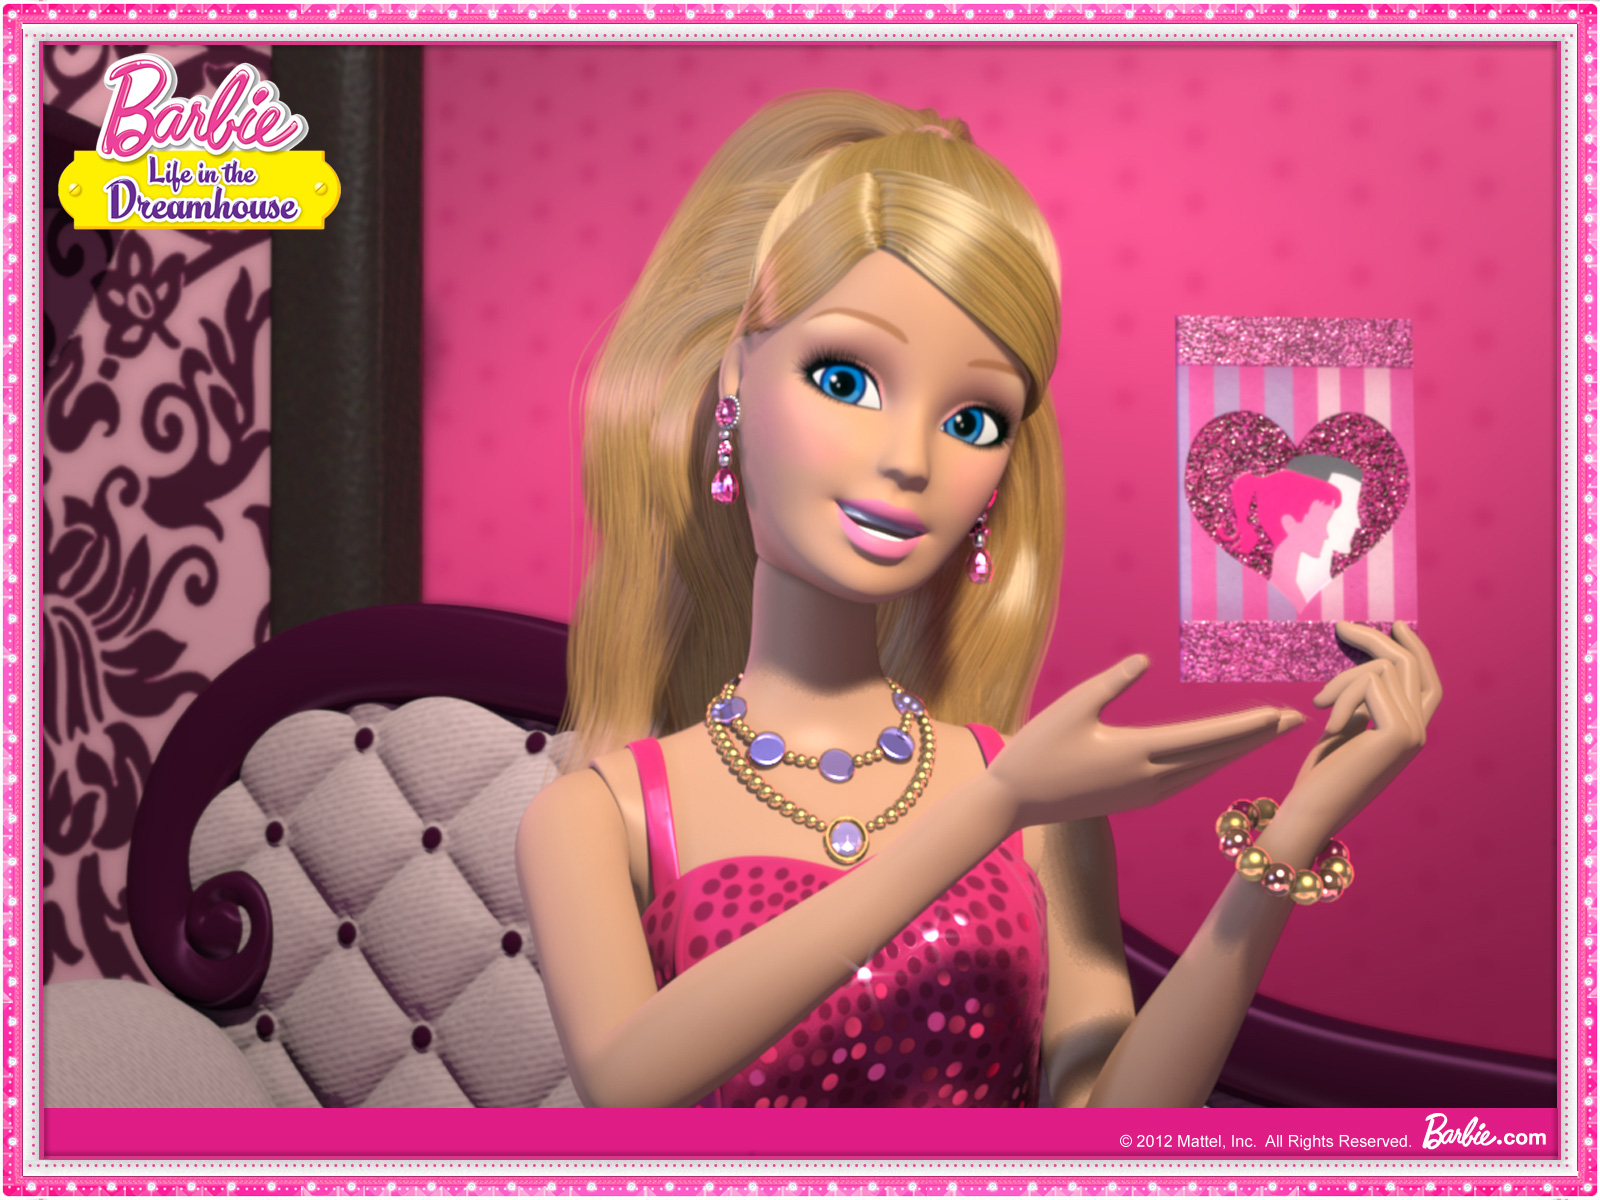 Barbie Wallpaper barbie life in the dreamhouse 33953322 1600 1200jpg 1600x1200